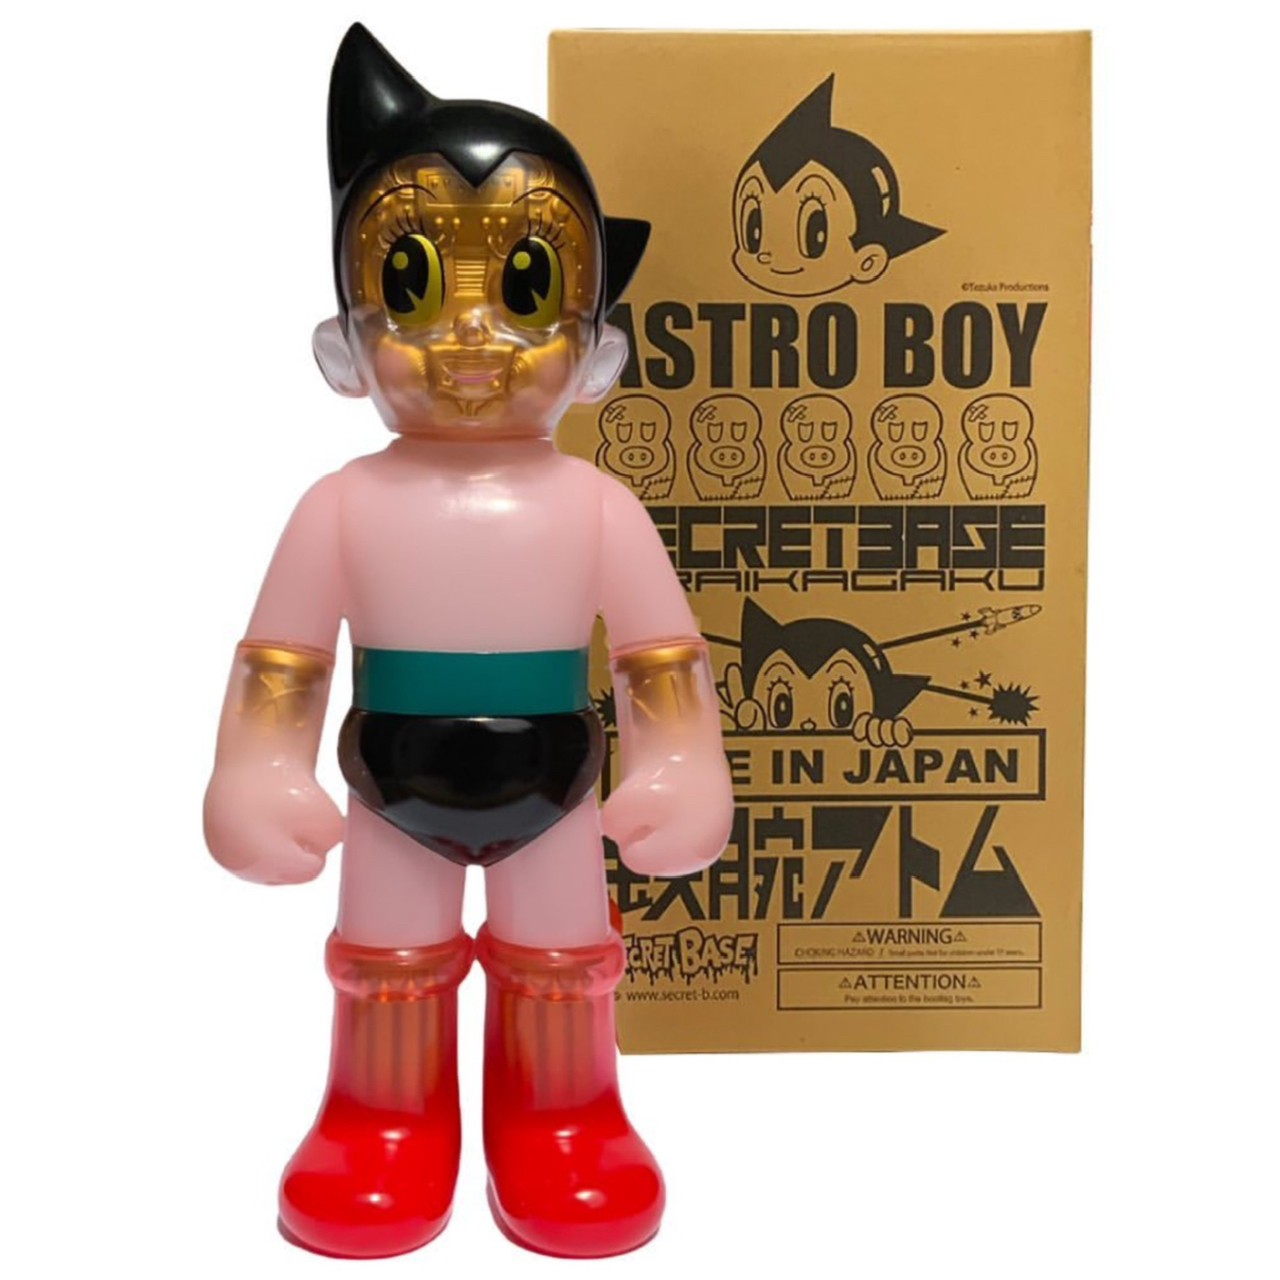 Big Scale Astro Boy 鉄腕アトム #13 - SECRET BASE ONLINE STORE